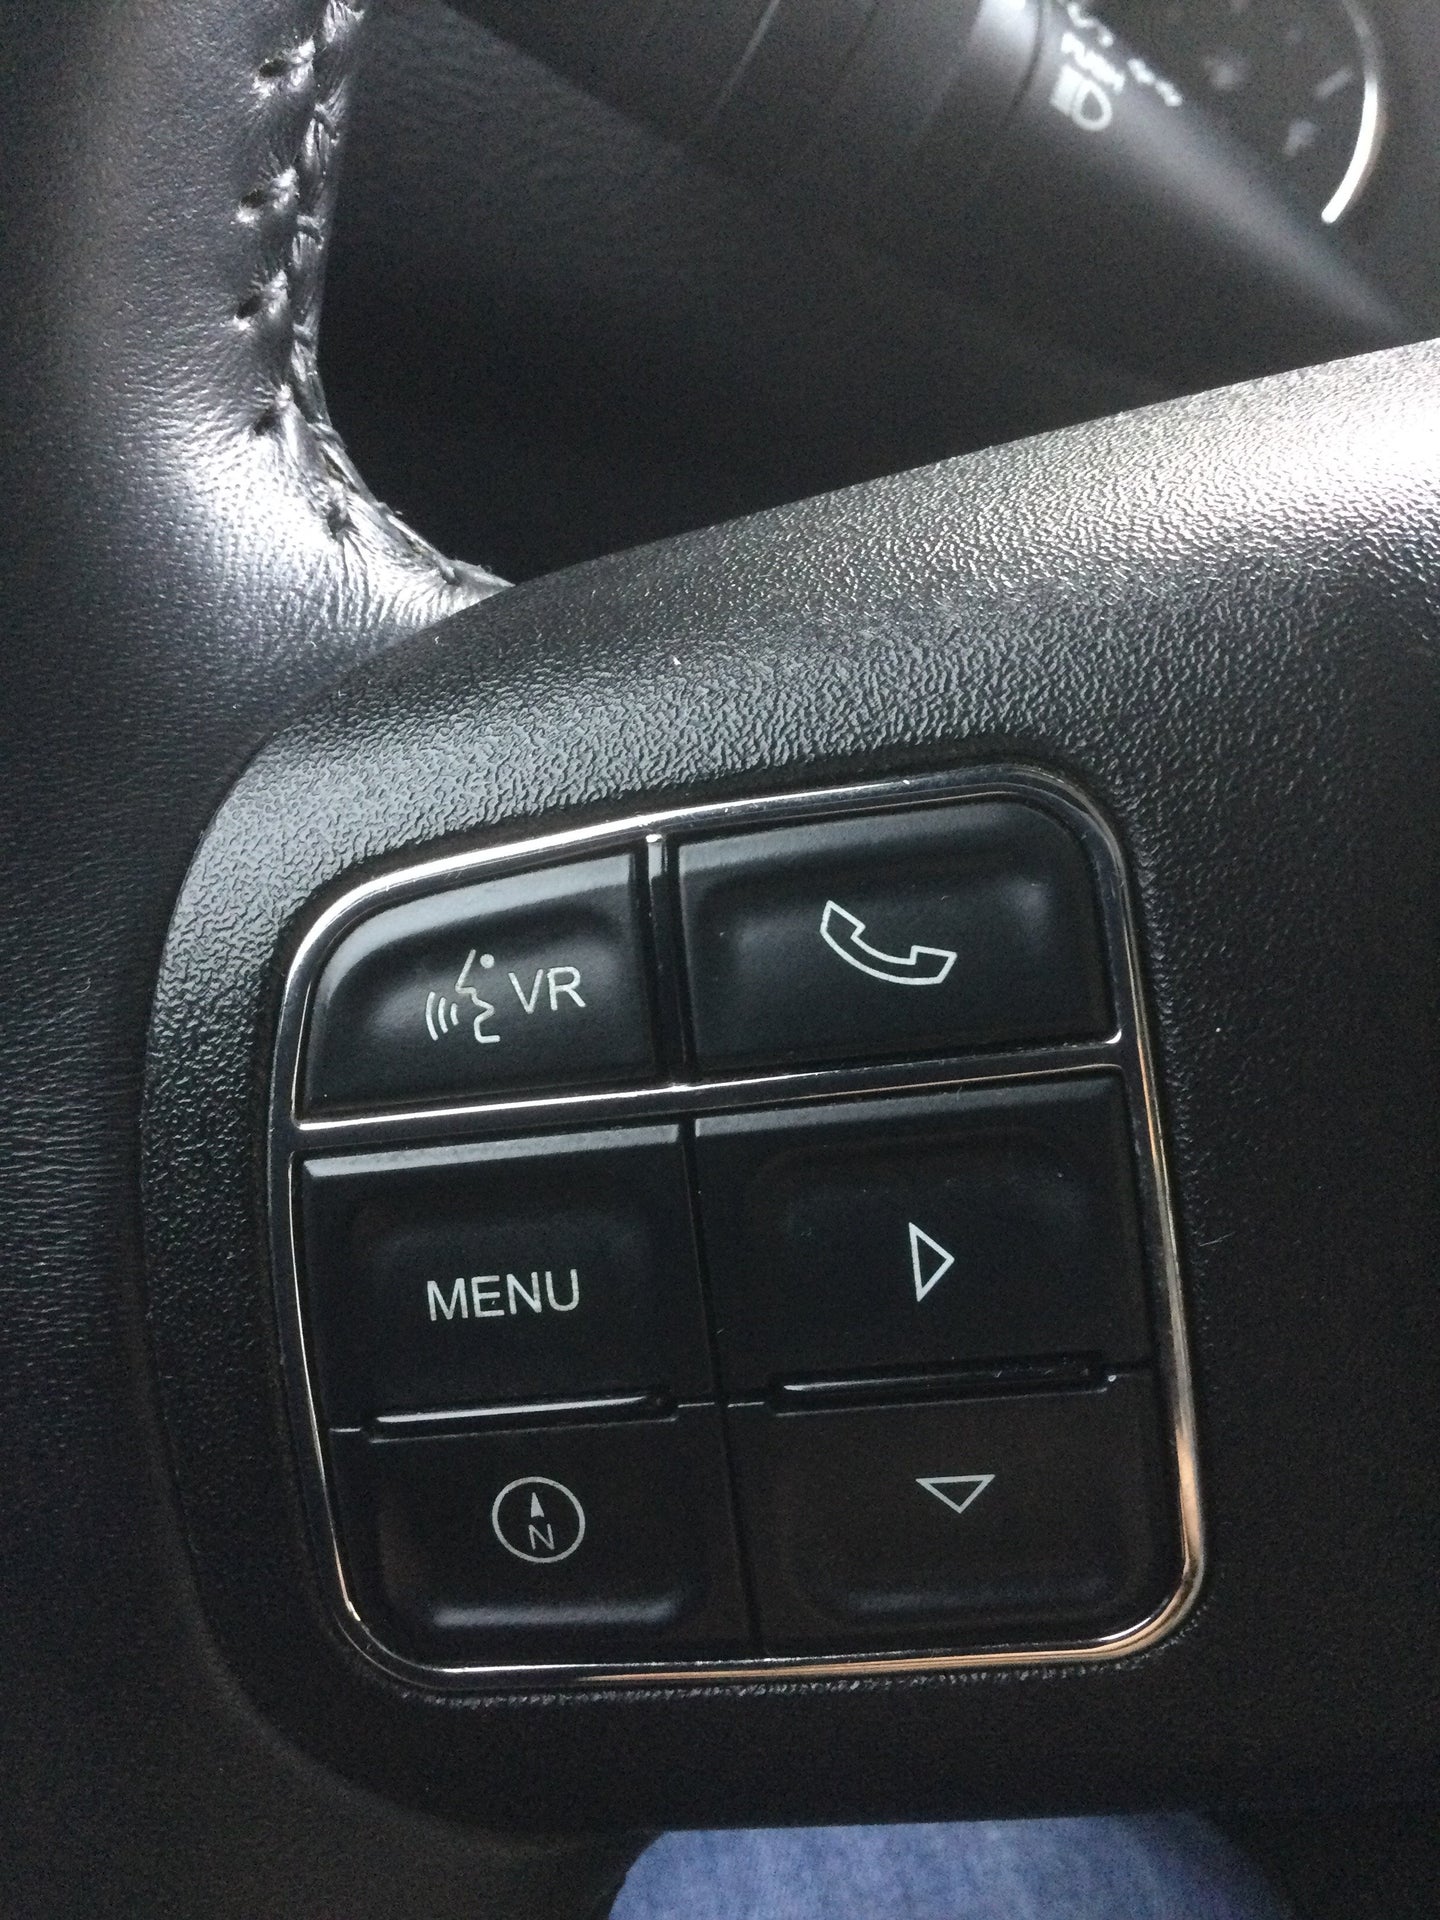 2013 wrangler steering wheel phone controls | Jeep Wrangler Forum